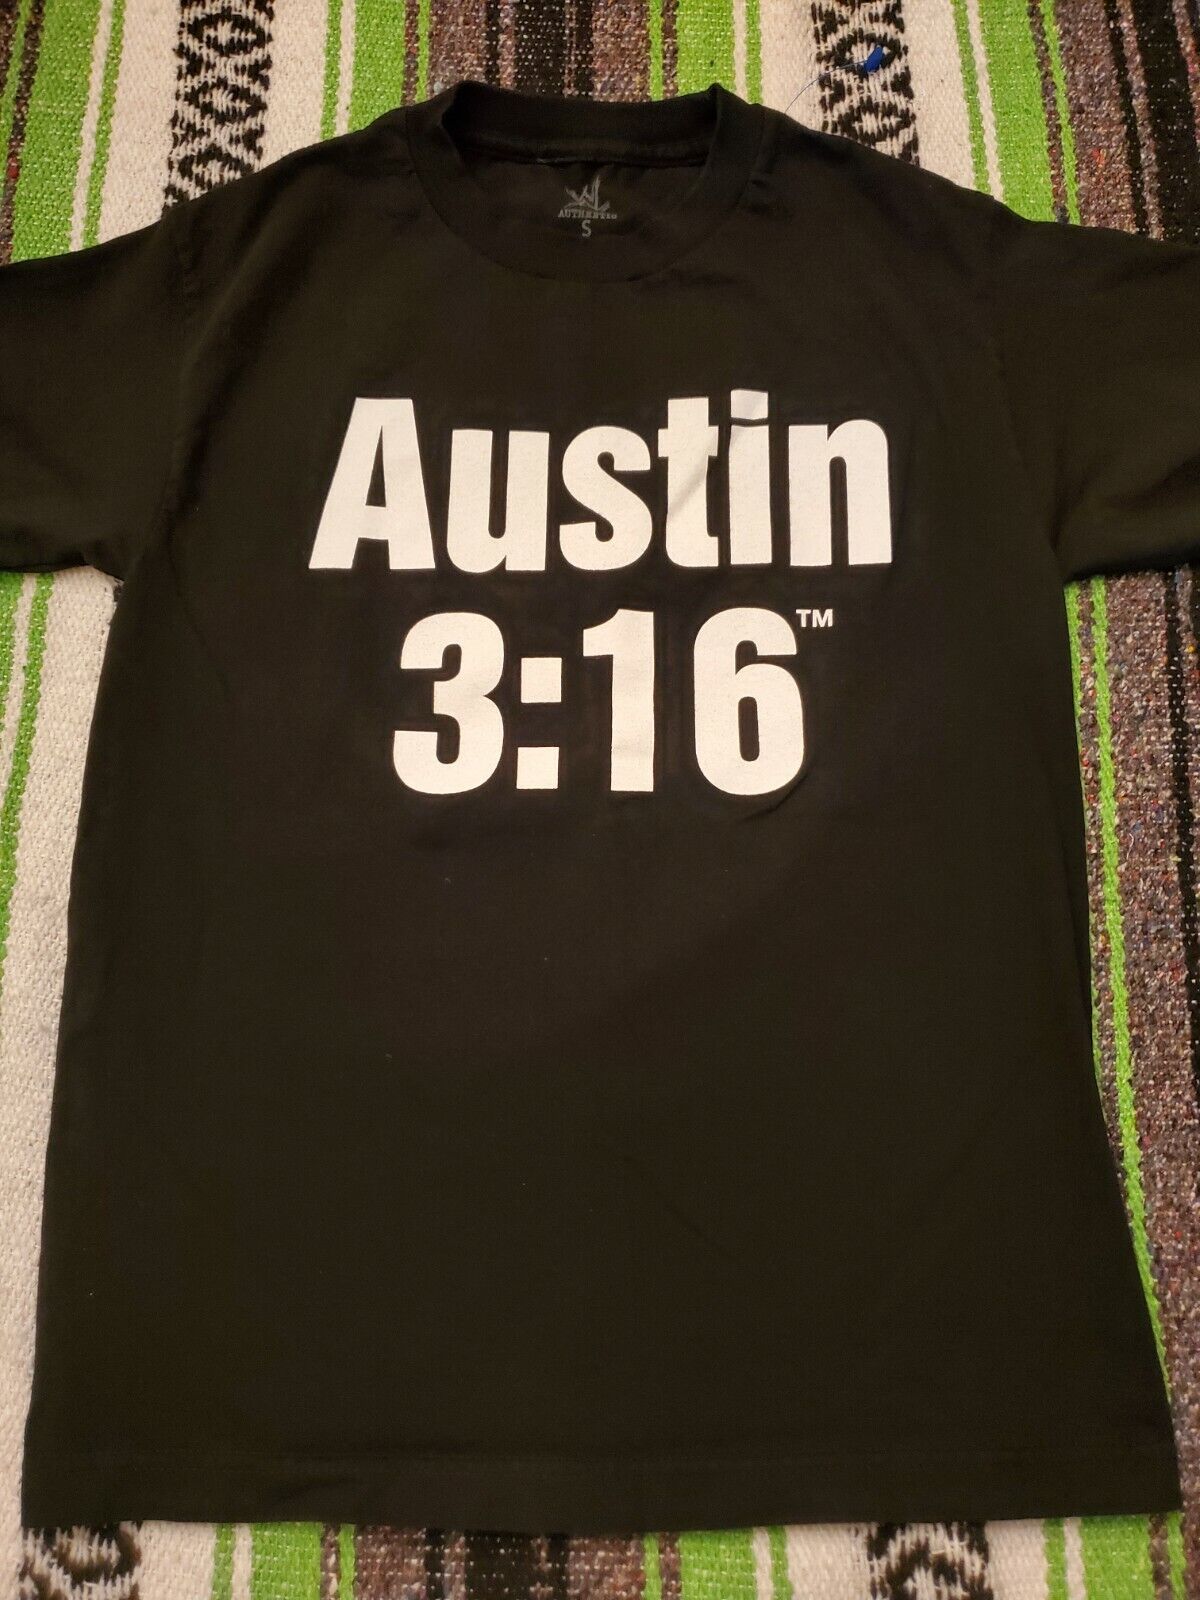 Stone Cold Steve Austin 3:16 WWE T Shirt Mens Size S Black | eBay